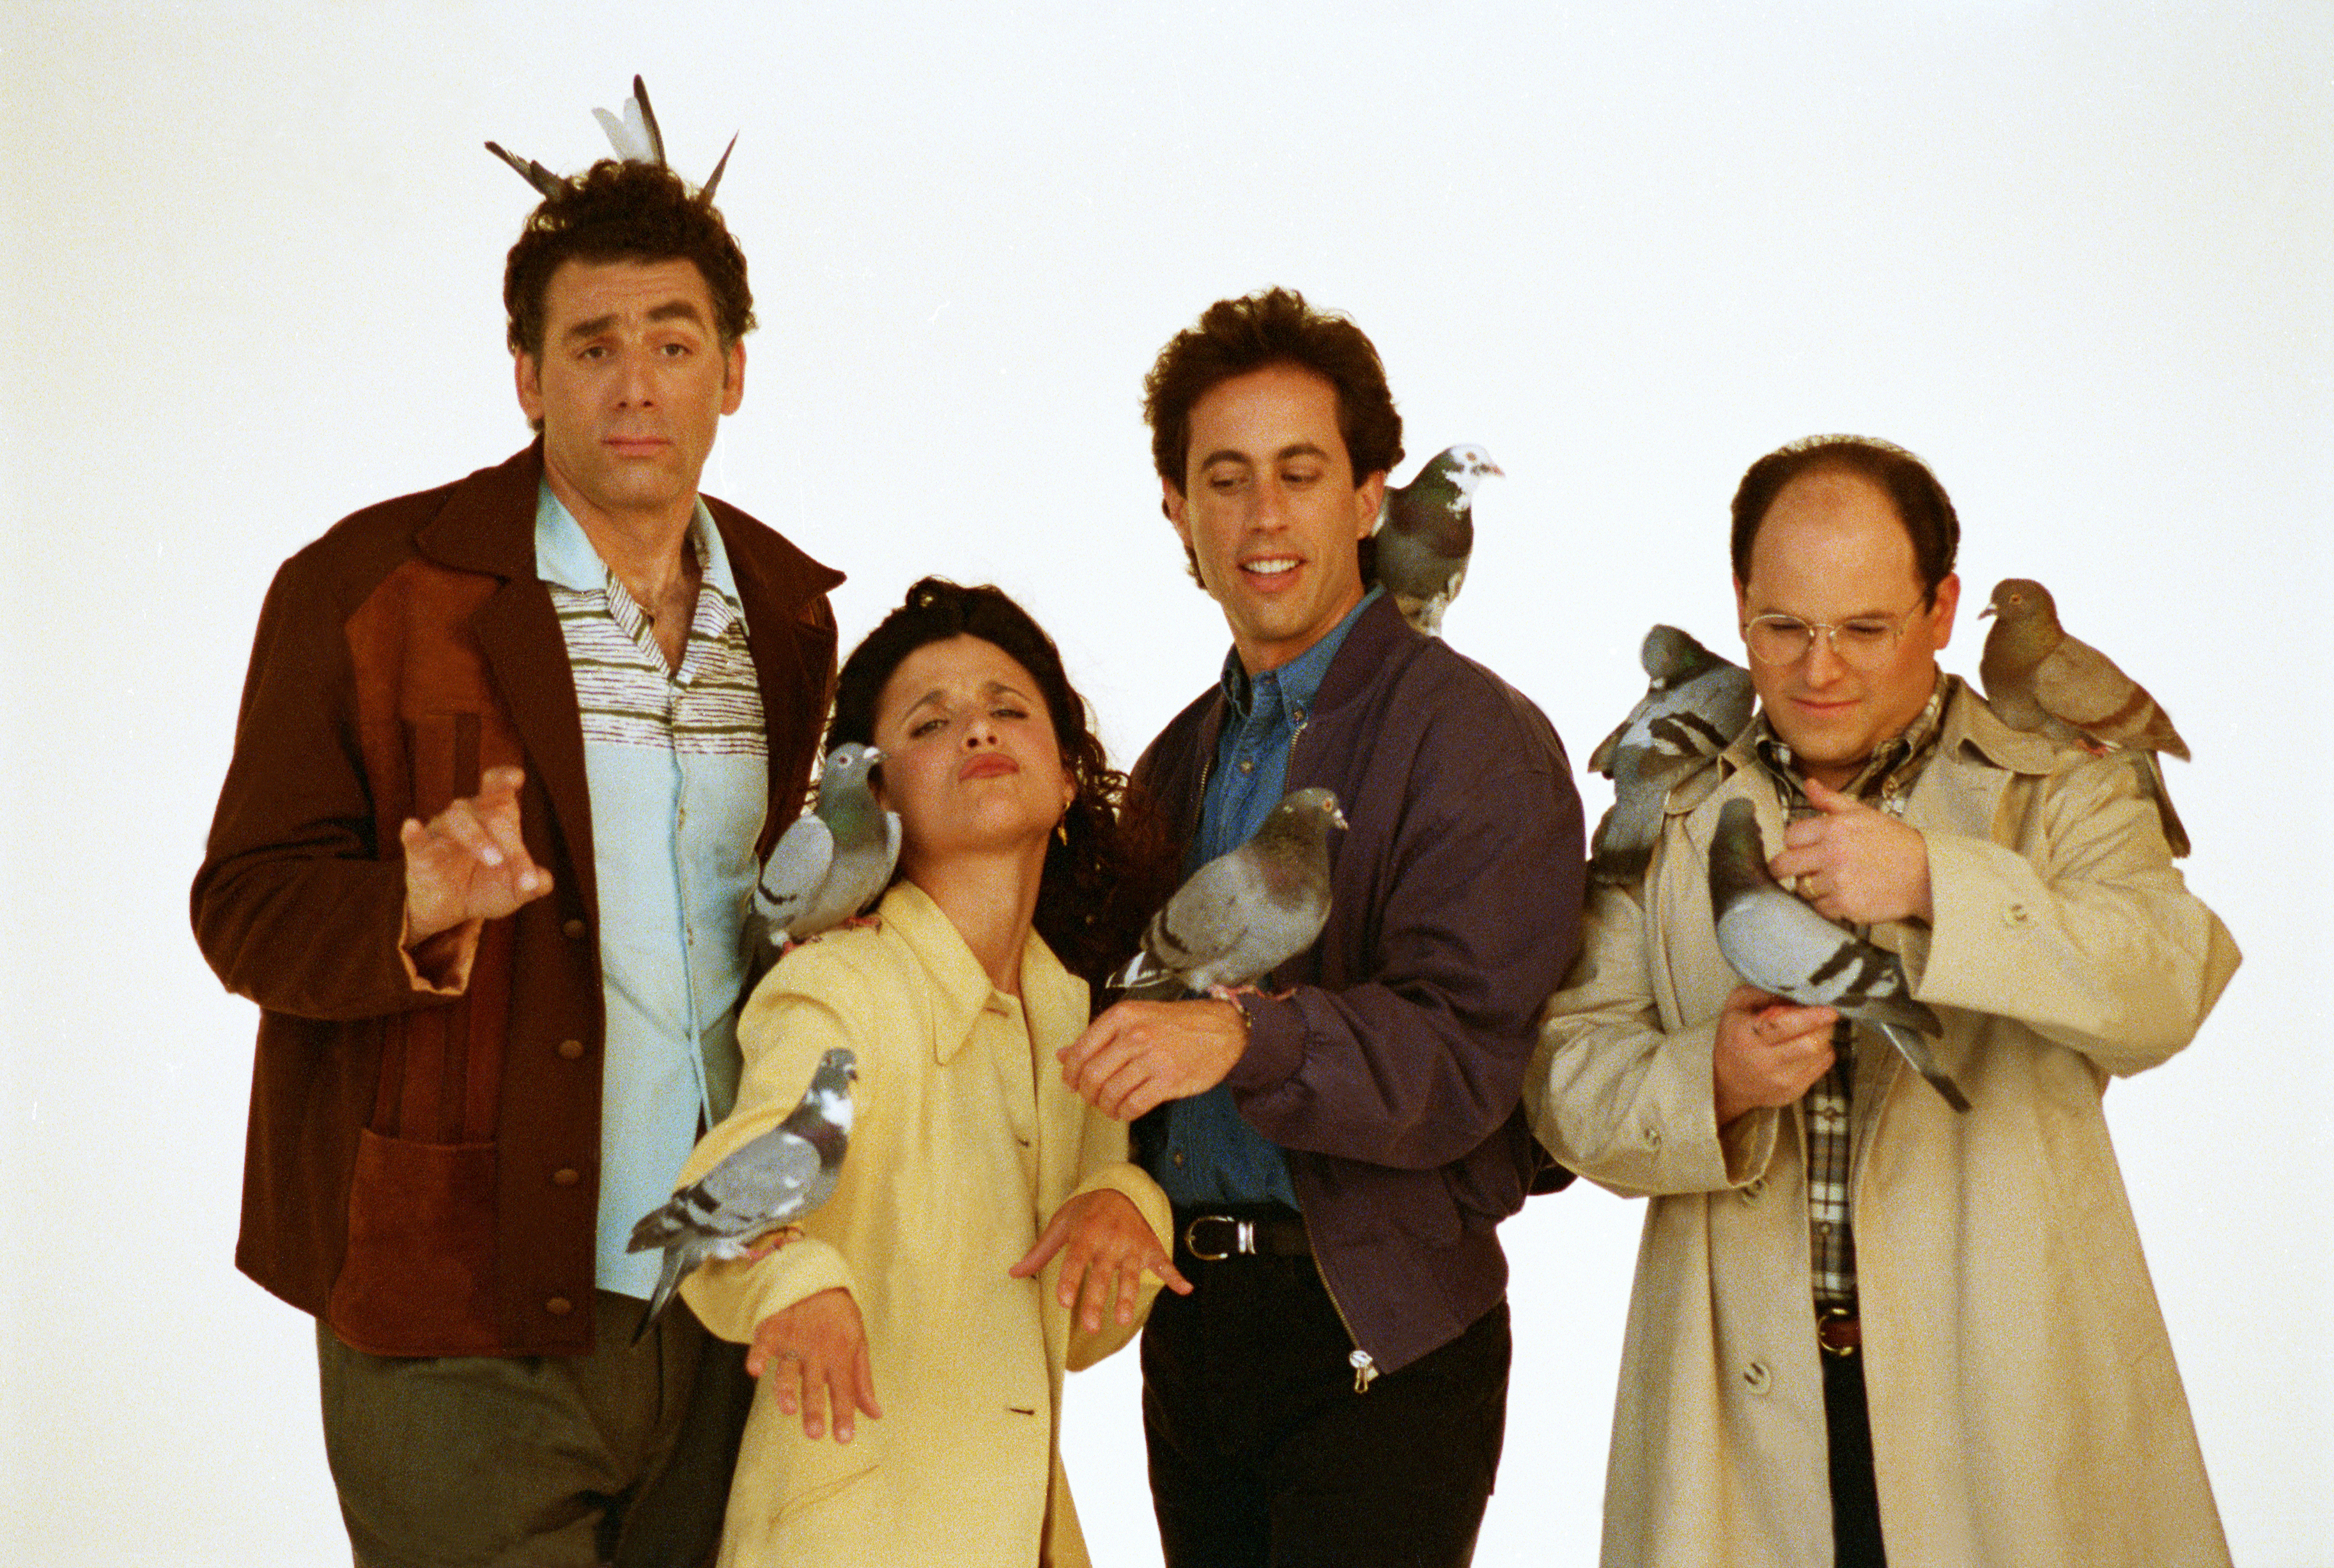 Seinfeld inspired a bidding war between streaming services